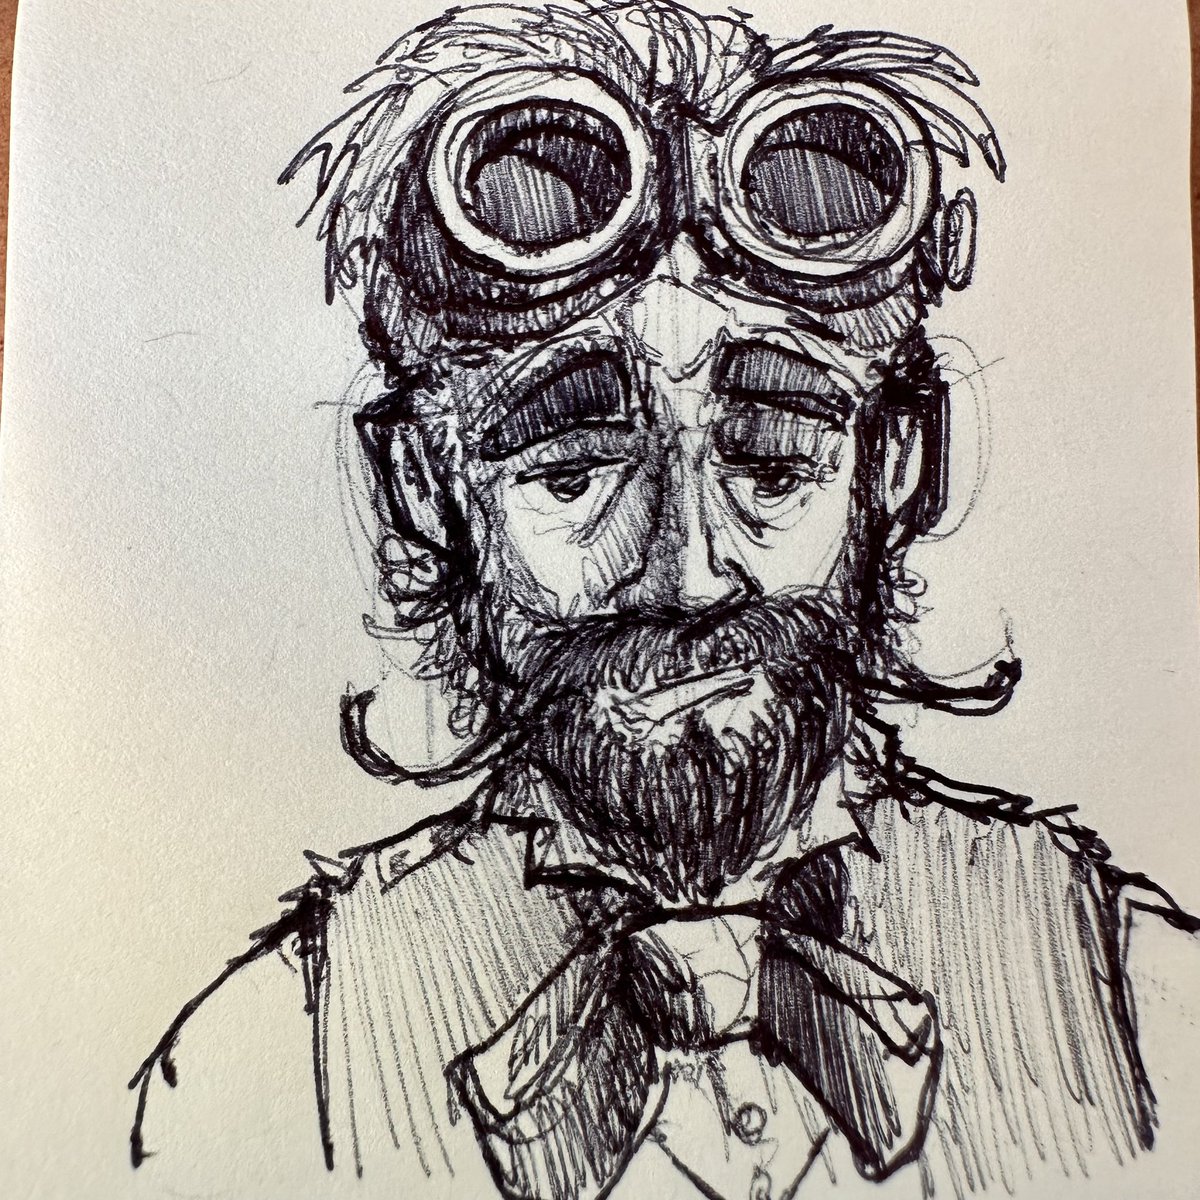 A #steampunk #sketchdrawing #characterdesign #steampunkdude #mustache . . . . . #art #illustration #doodlebags #doodle #draw #drawing #nashville #nashvilleartist #nashvilleart #sketching #sketch #drawing #ballpointsketch